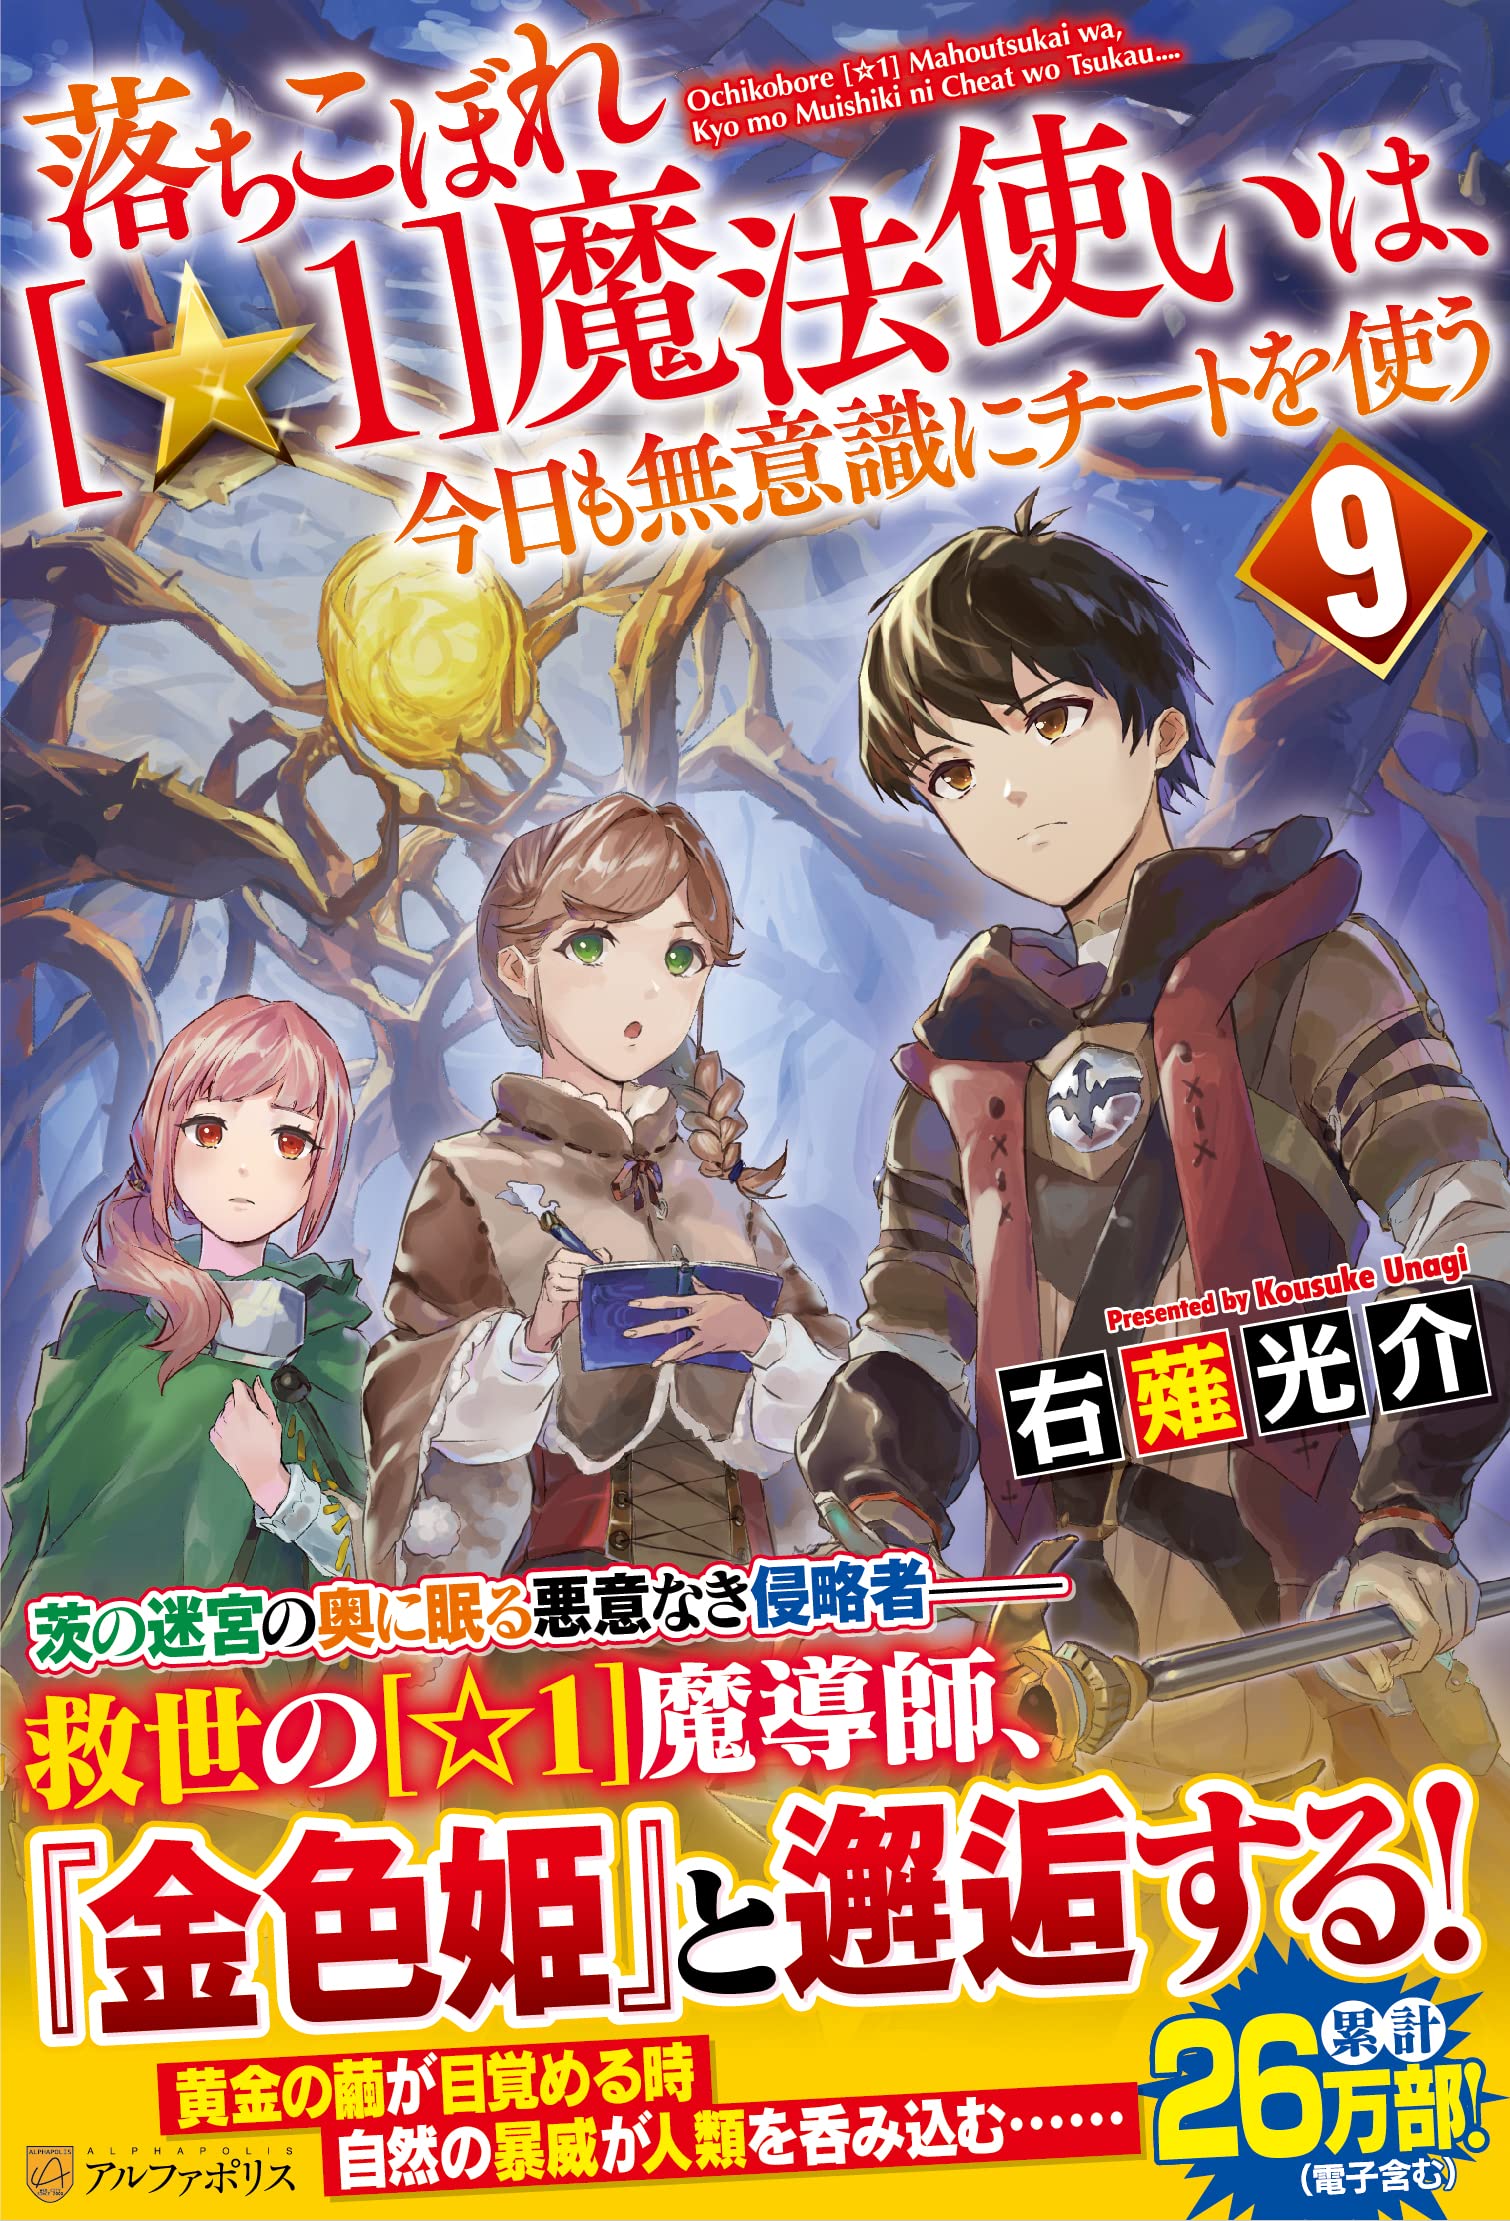 Manga Mogura RE on X: Knights & Magic light novel series by